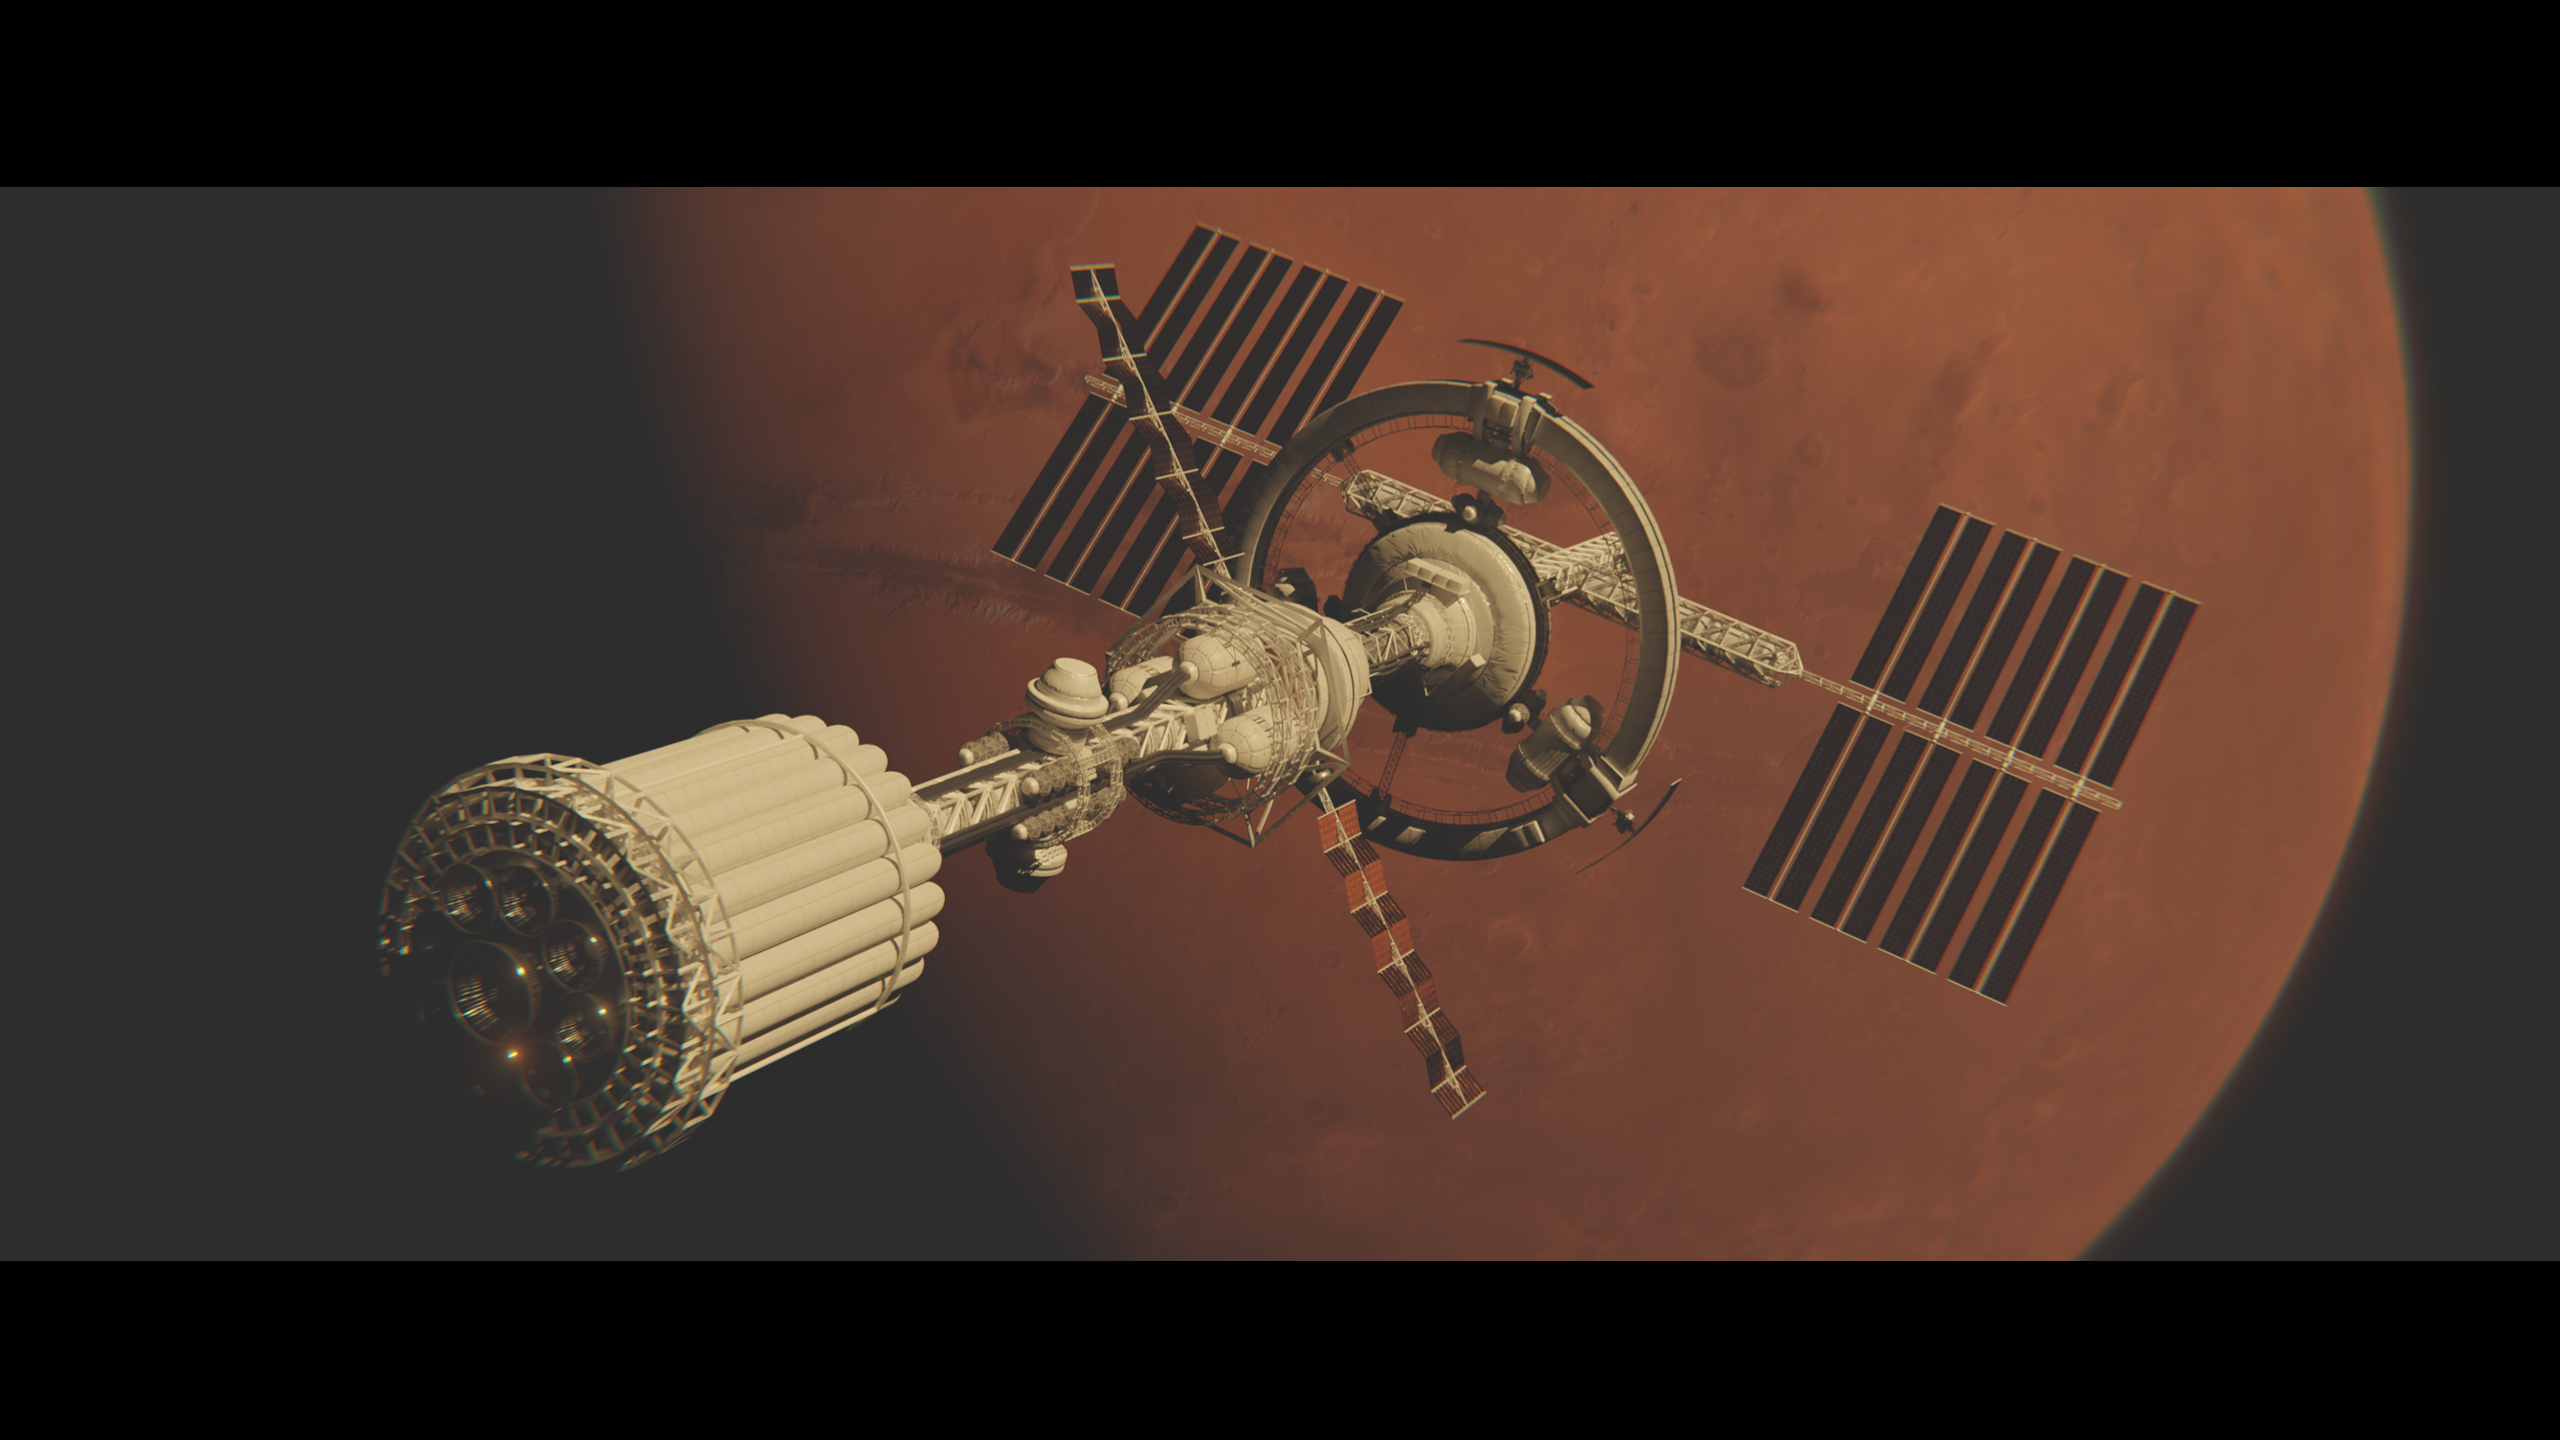 General 2560x1440 space Mars spaceship planet CGI digital art